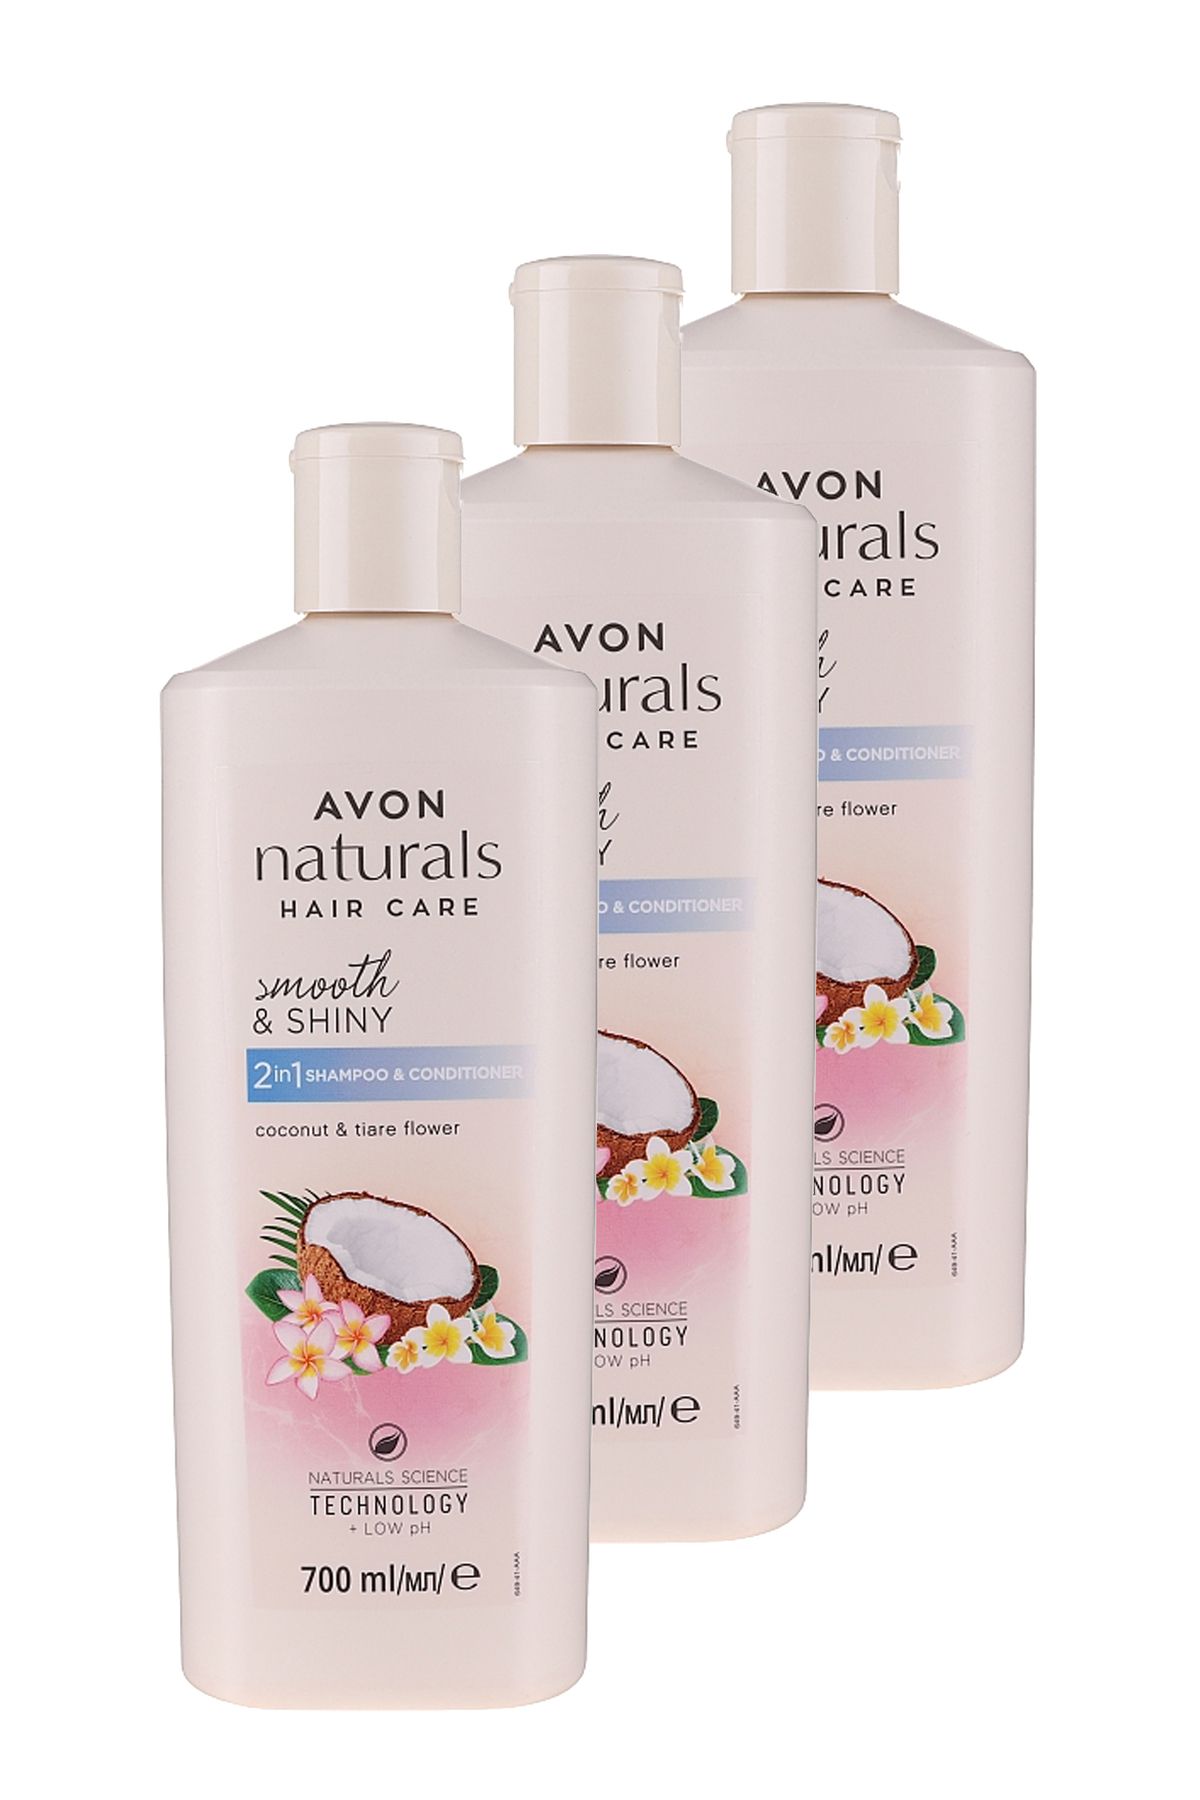 Avon Naturals Hindistan Cevizi ve Tiare Çiçeği Kokulu Şampuan ve Saç Kremi 700 Ml. Üçlü Set